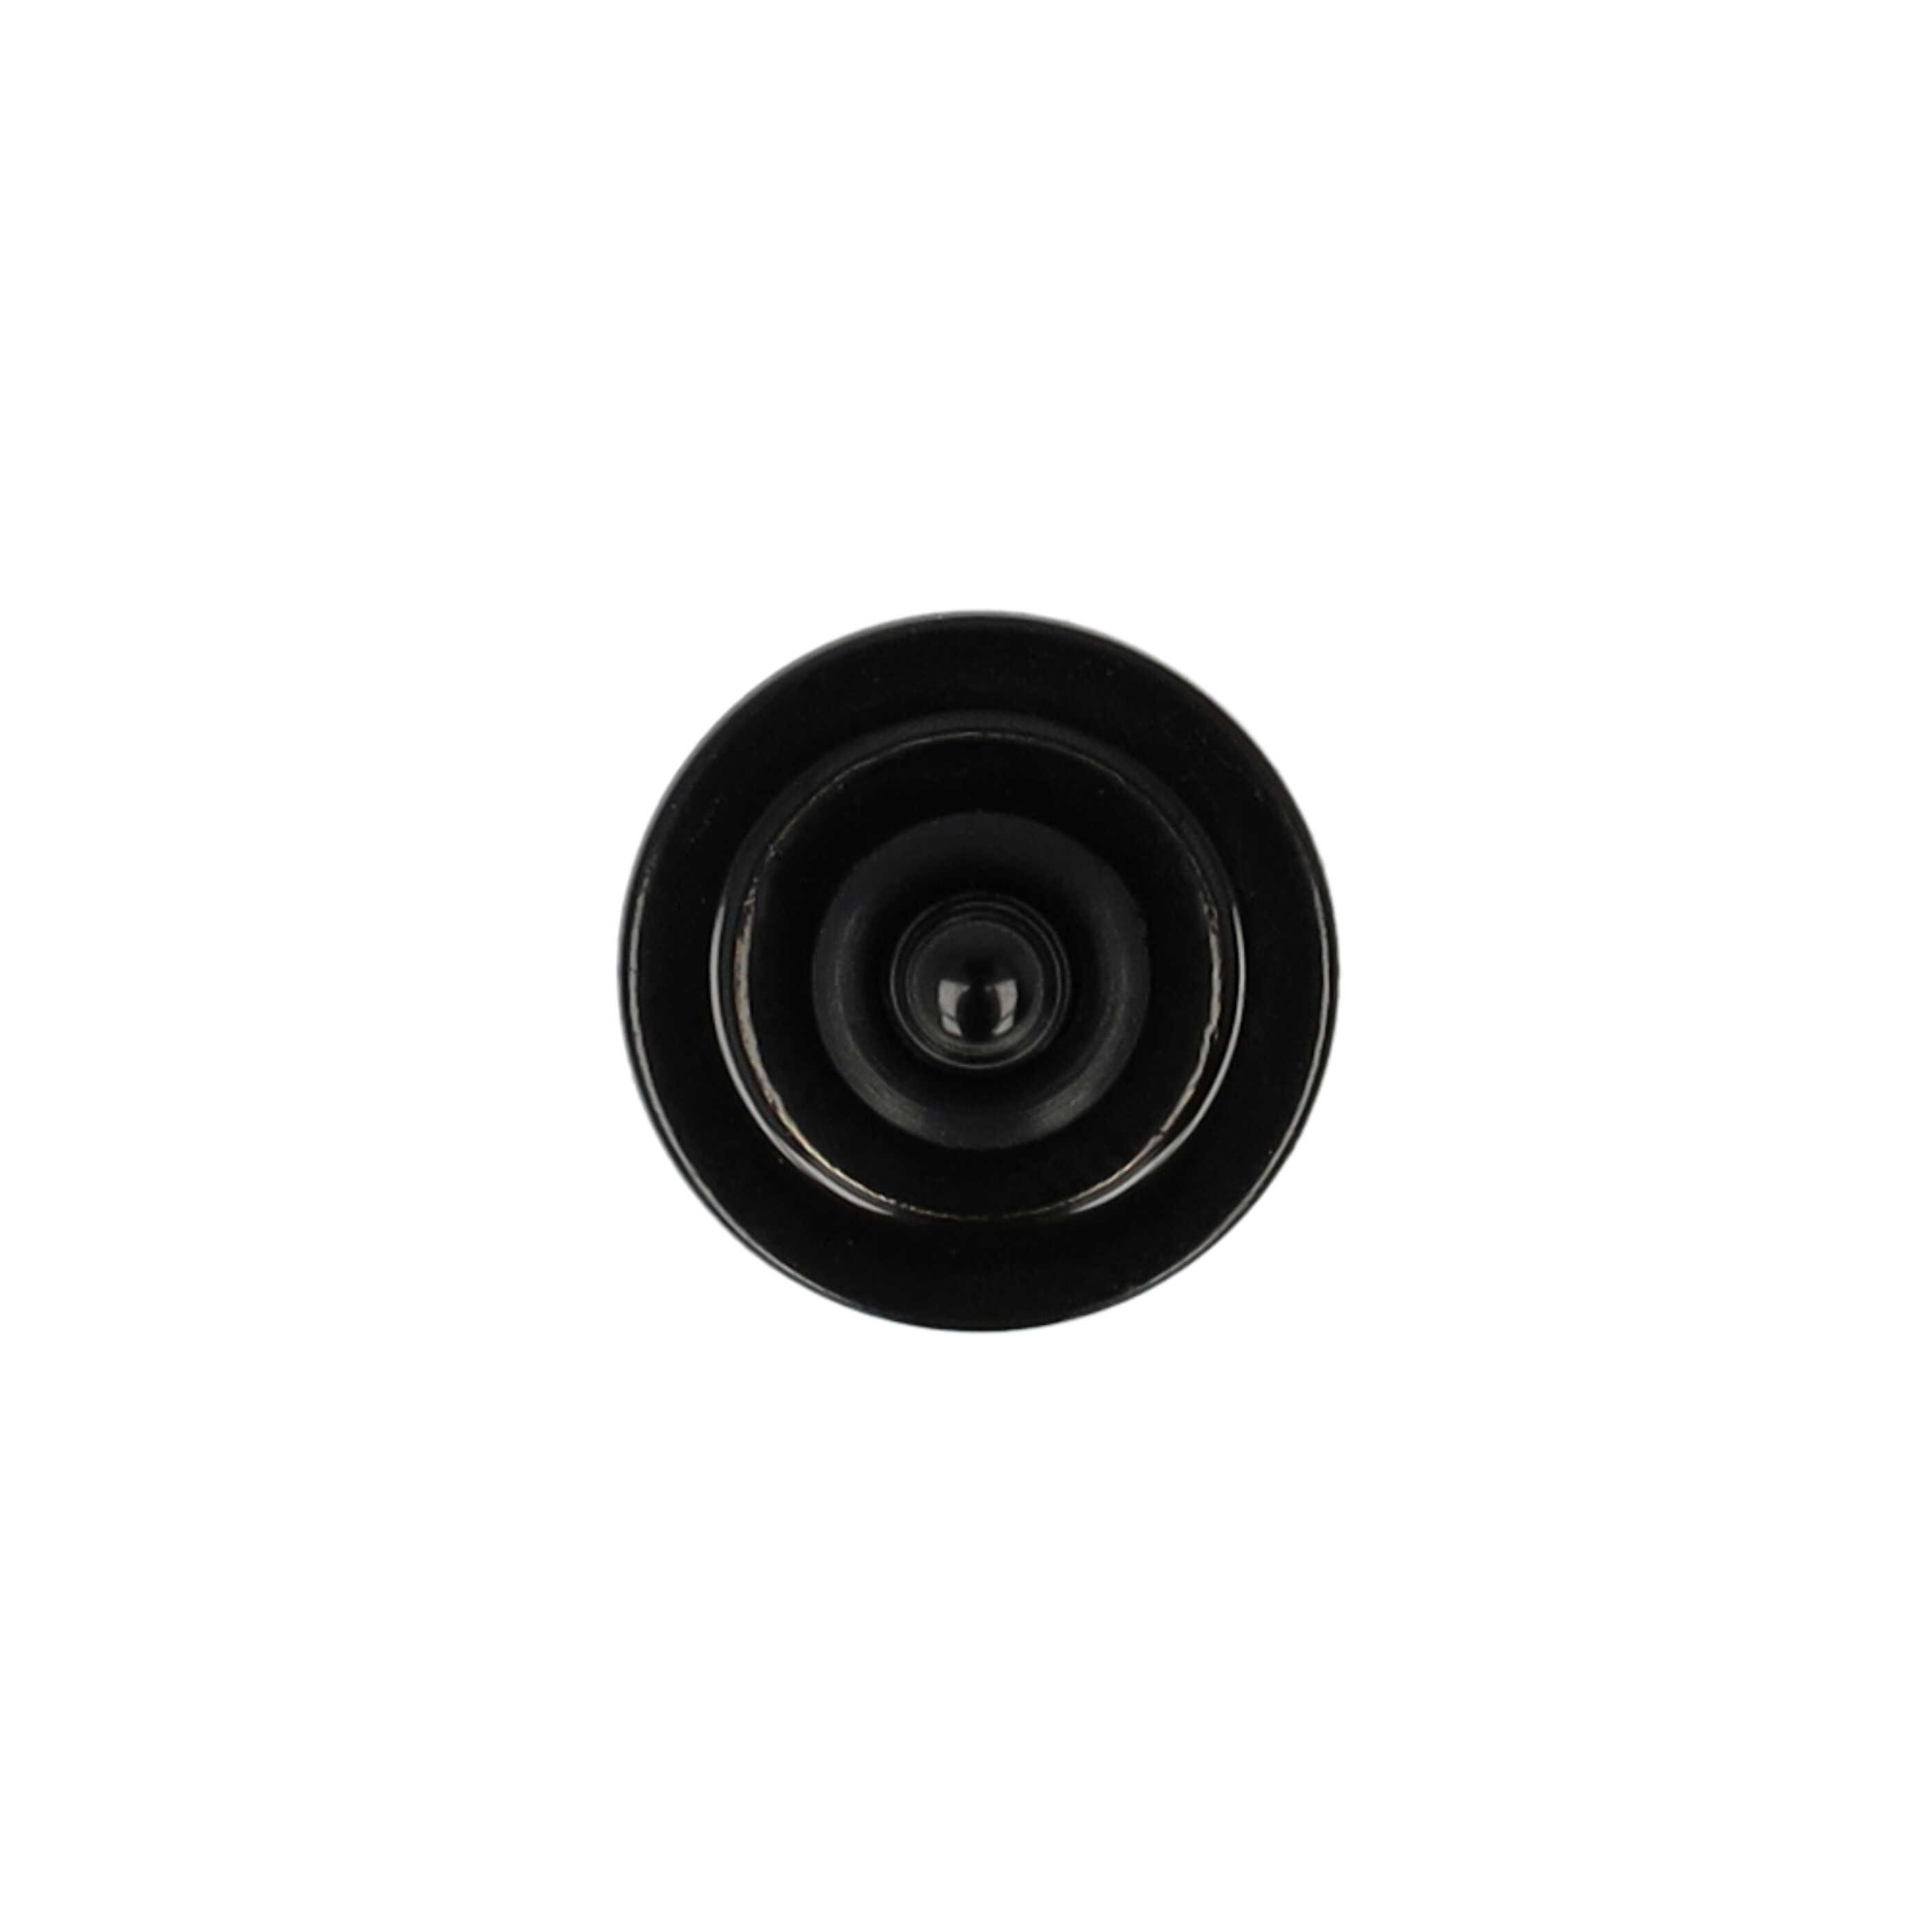 Release Button suitable for X-E1 FujifilmCamera etc. - Metal, Black